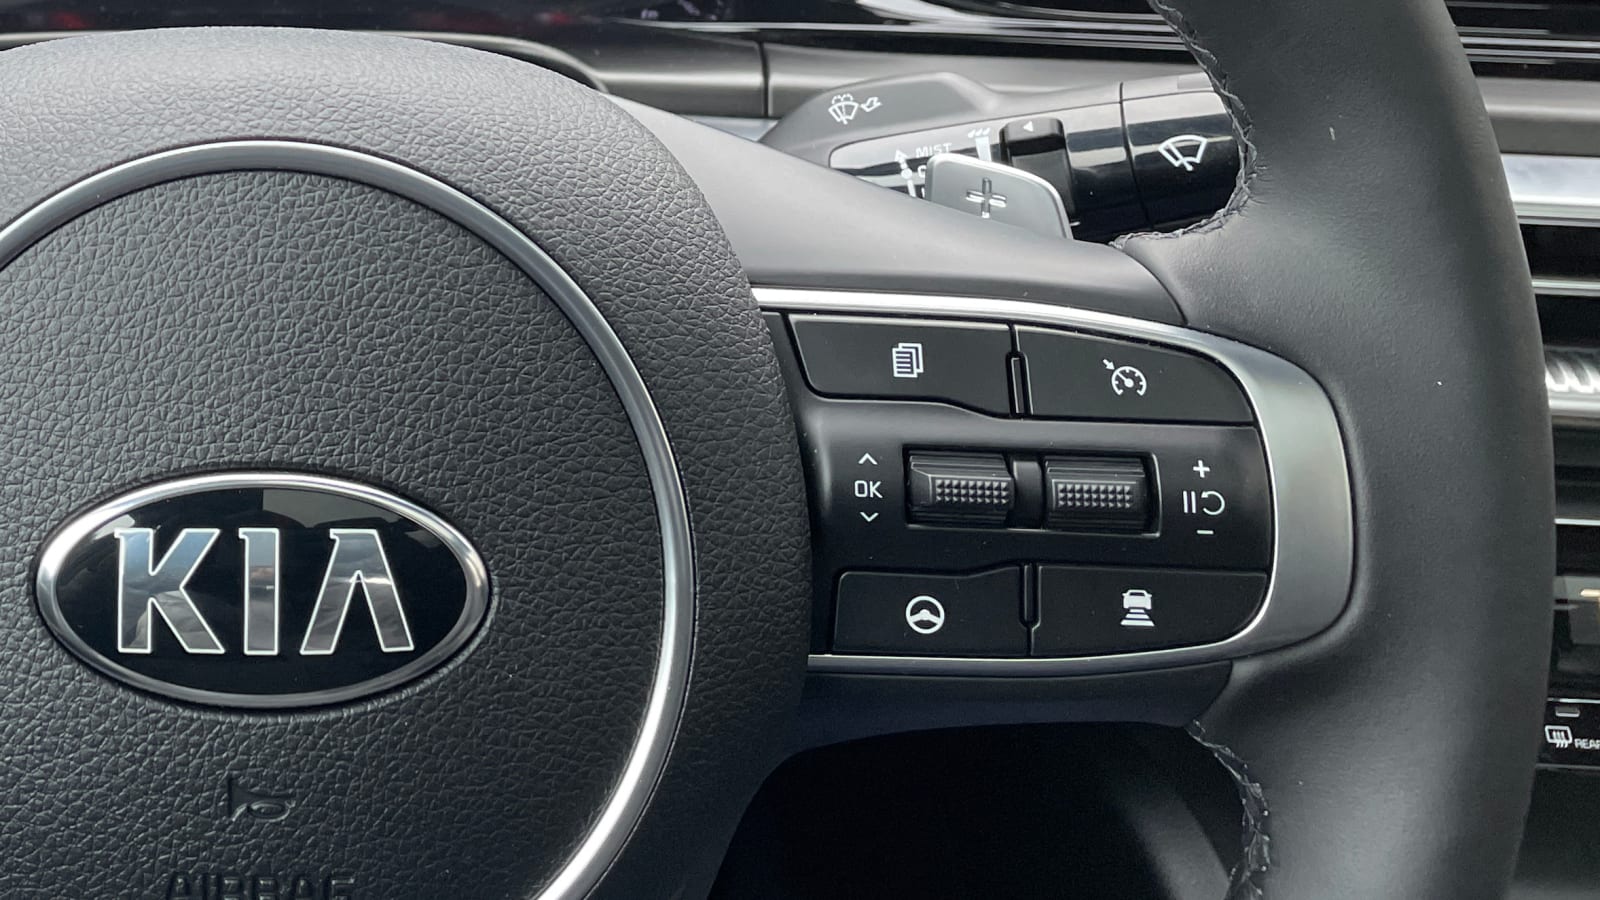 Kia Hyundai Genesis Highway Driving Assist Review Smooth As It Gets